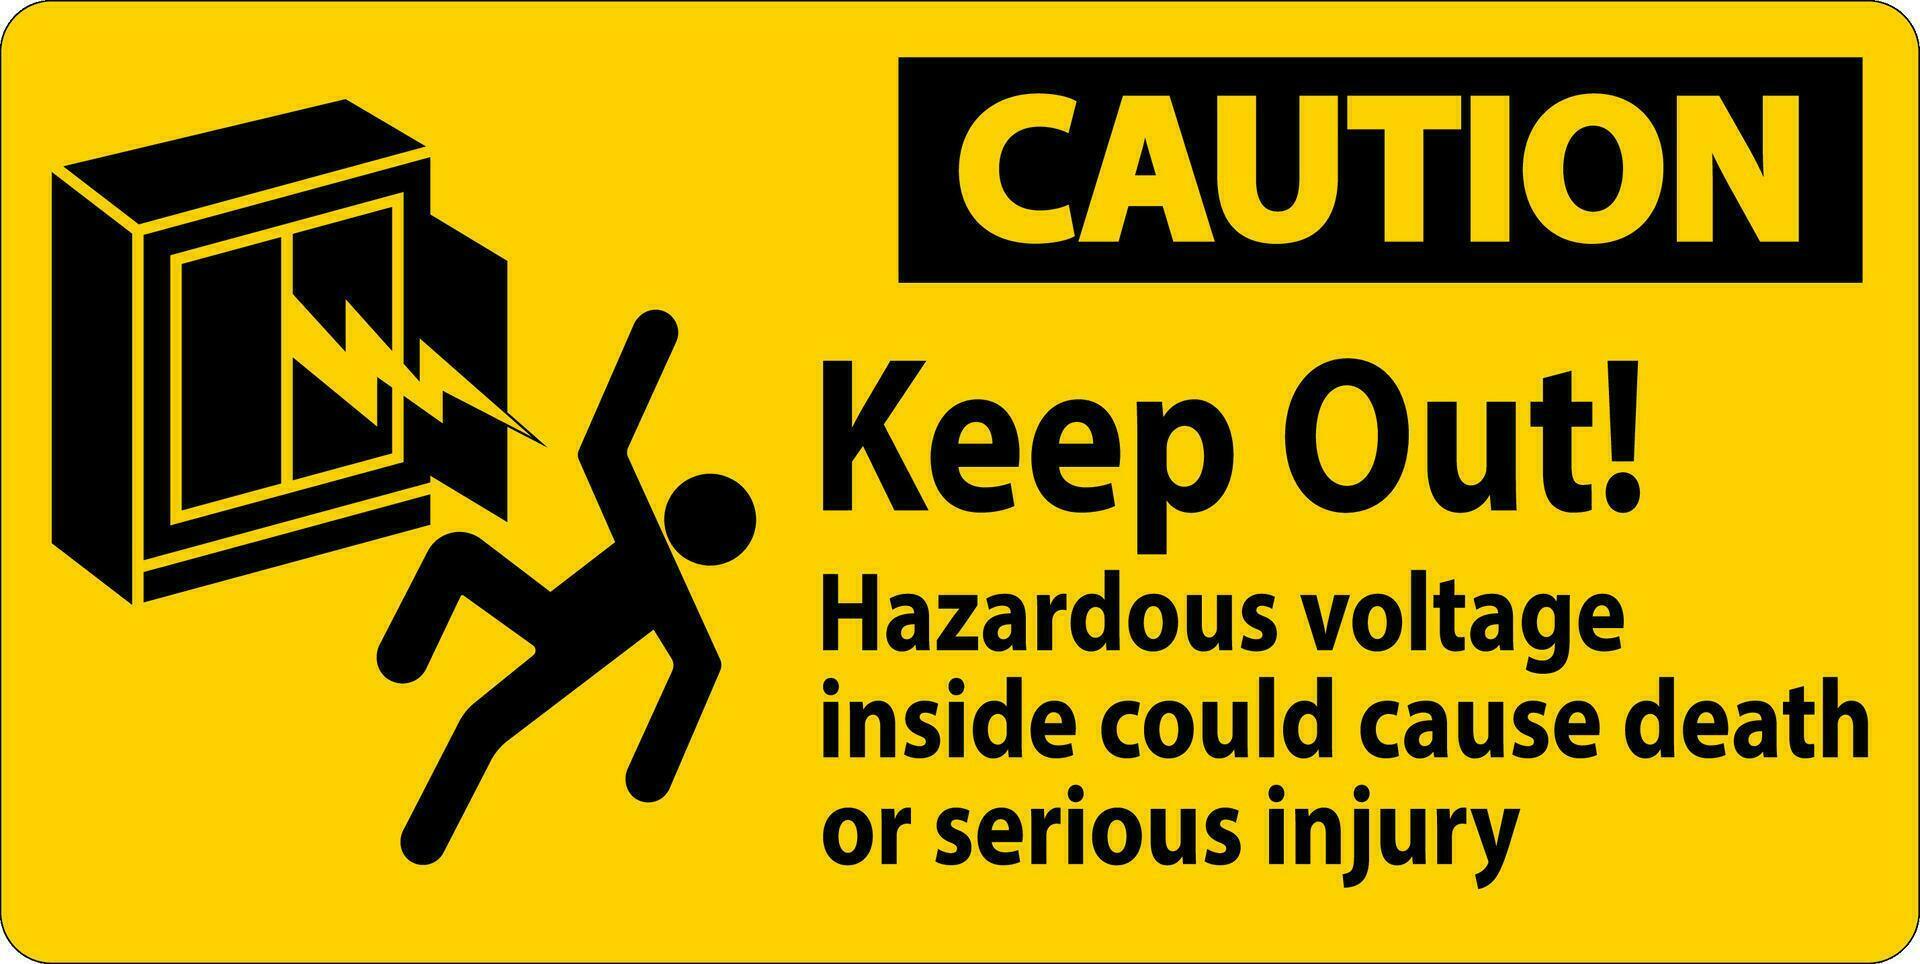 precaución firmar mantener fuera peligroso voltaje adentro, podría porque muerte o grave lesión vector